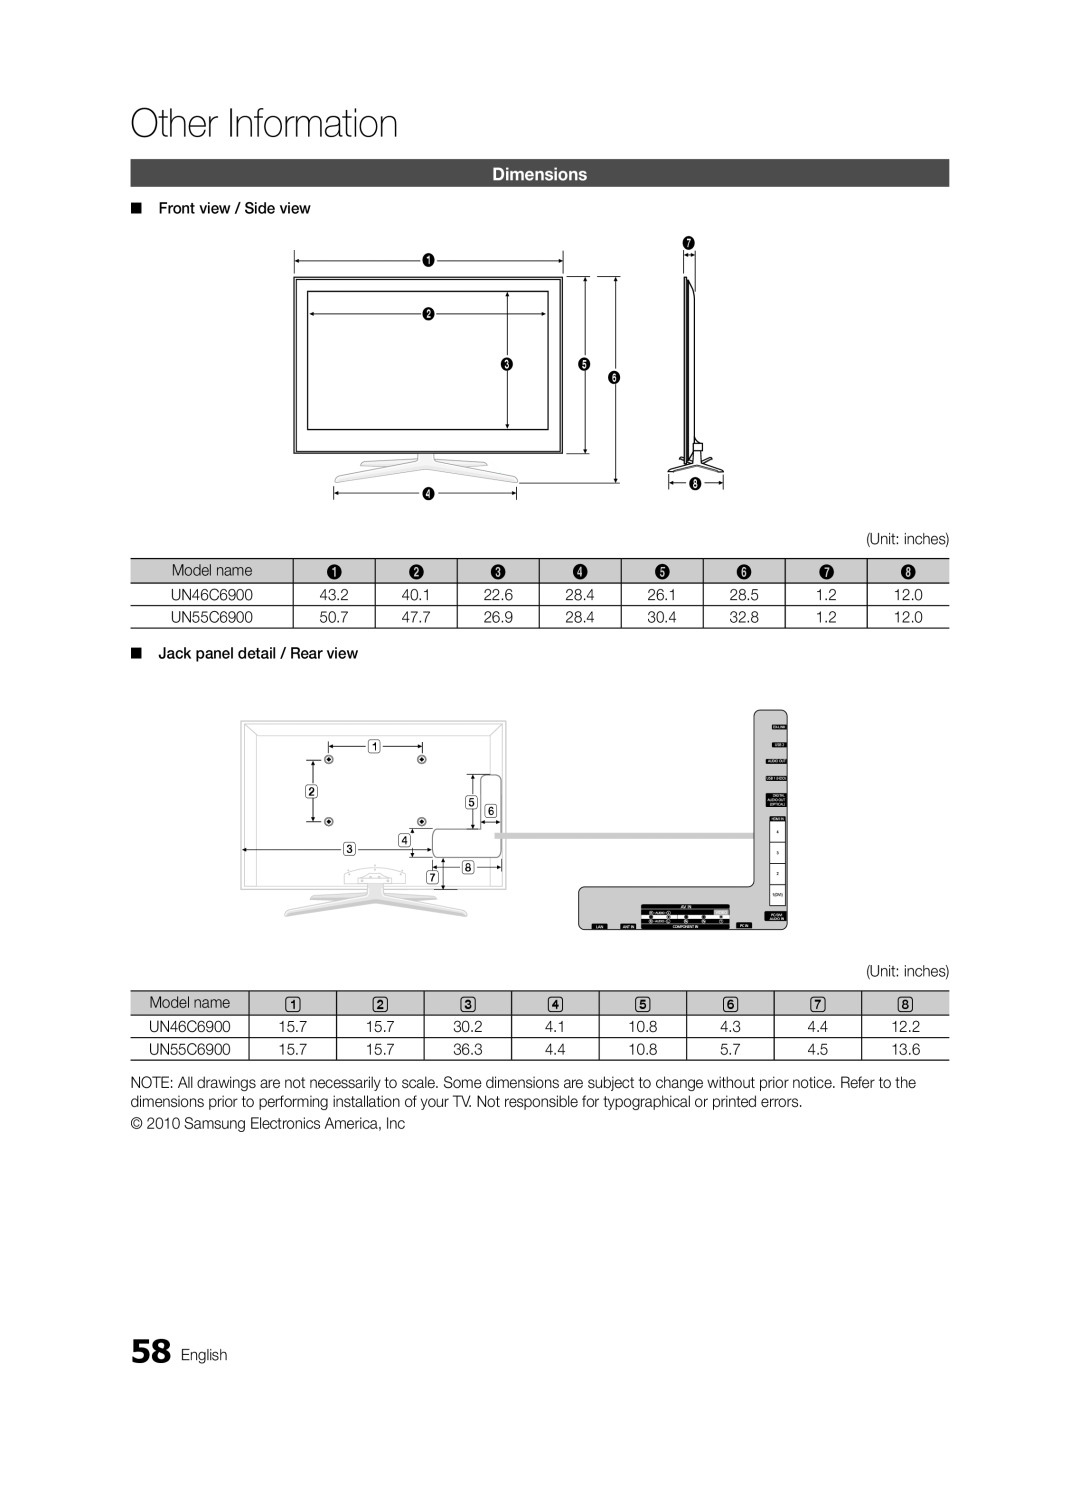 Samsung UN55C6900, BN68-02924A-02, UN46C6900 user manual Dimensions, Other Information 